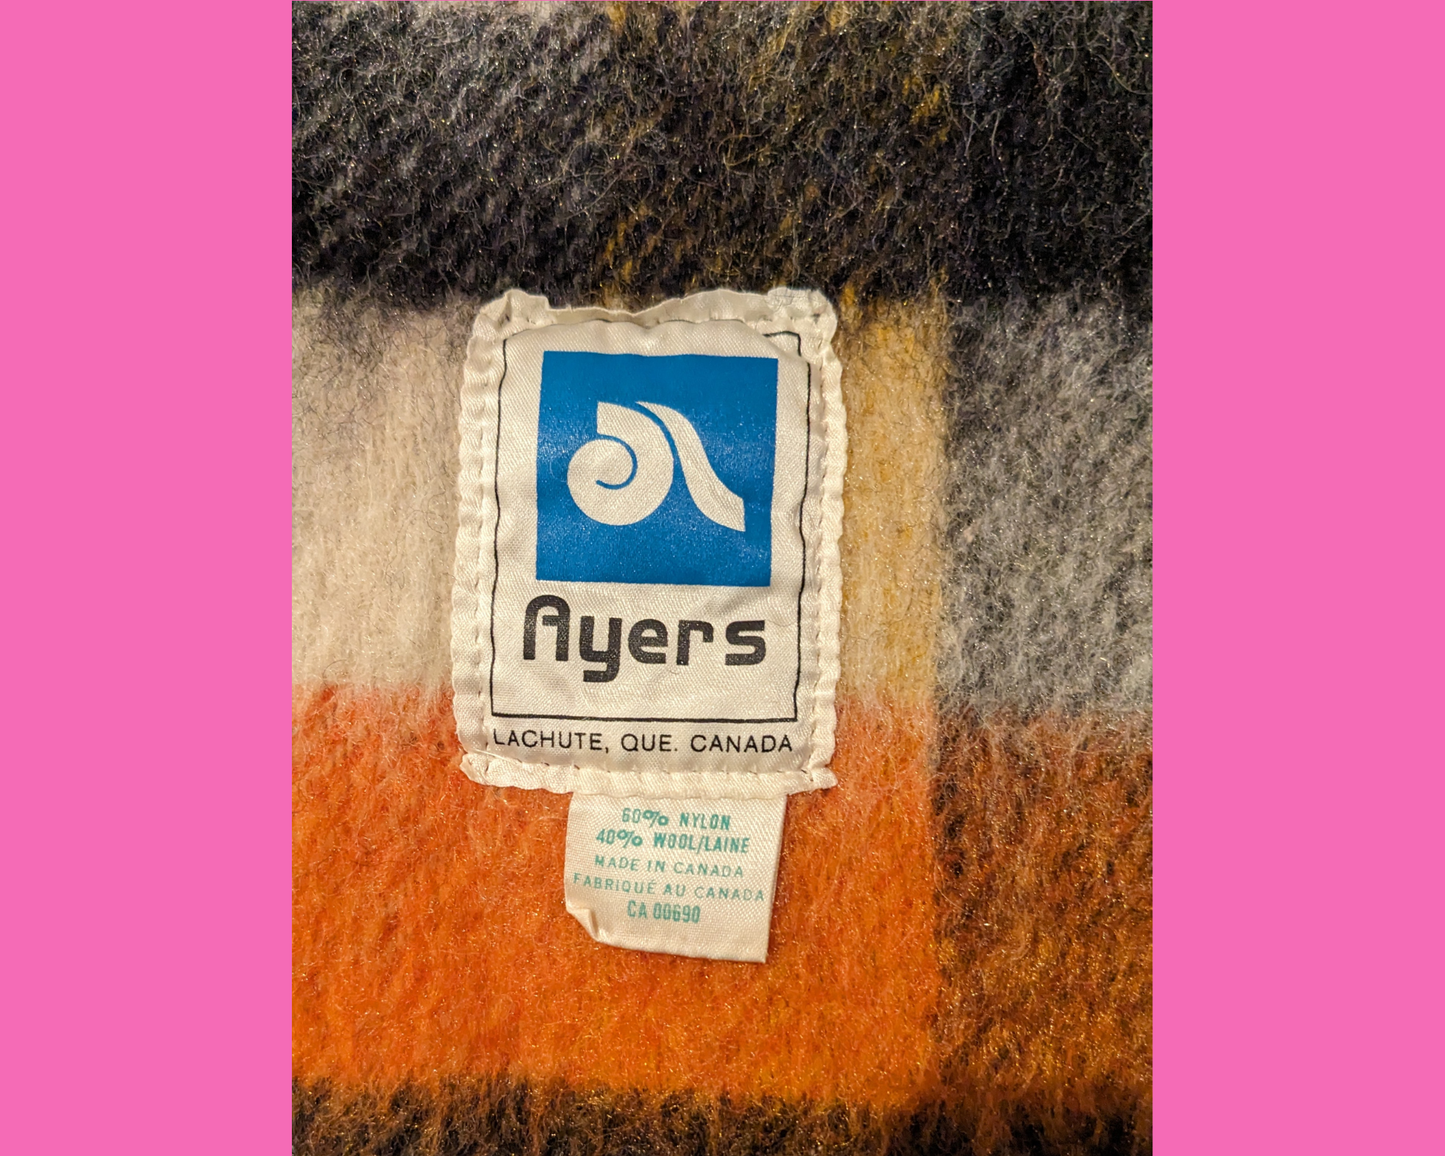 Vintage 1980's Wool and Nylon Canadian, Plaid Blanket